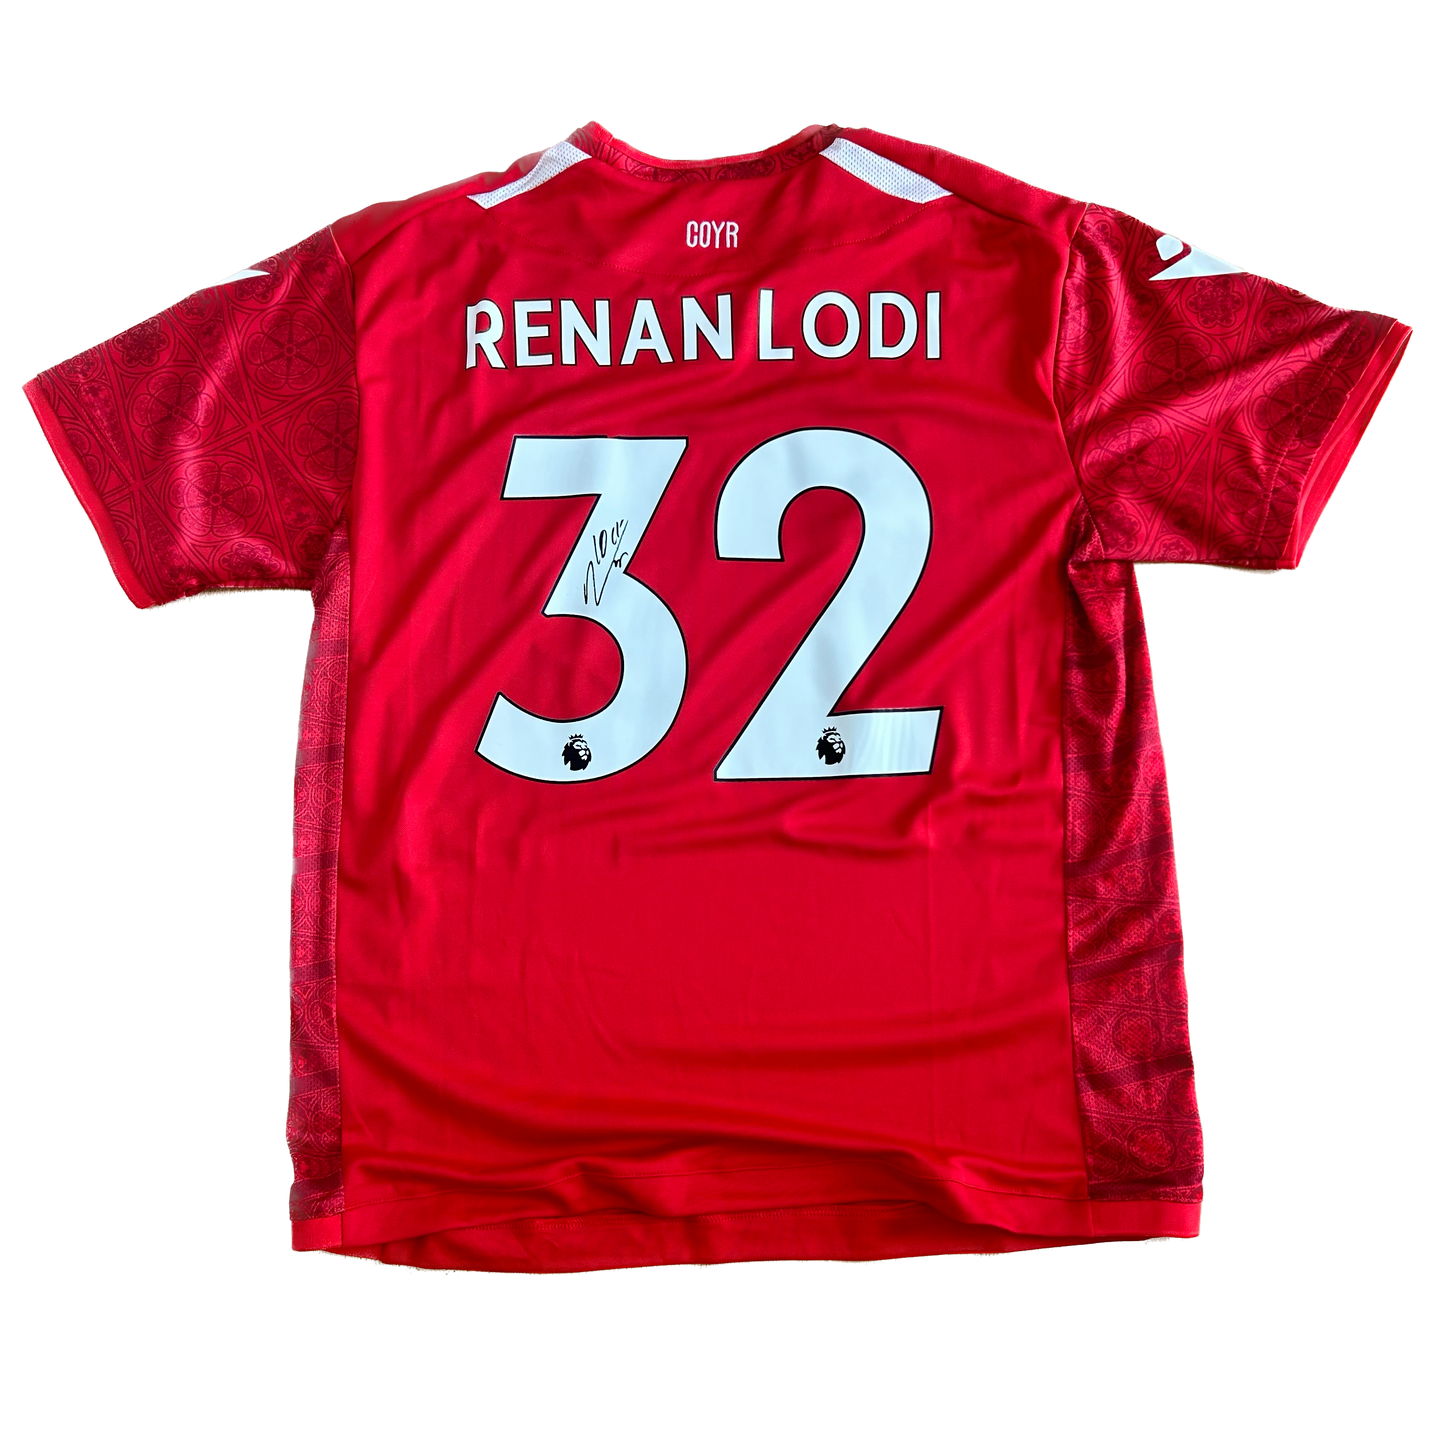 Signed Renan Lodi Nottingham Forest Home Shirt 22/23